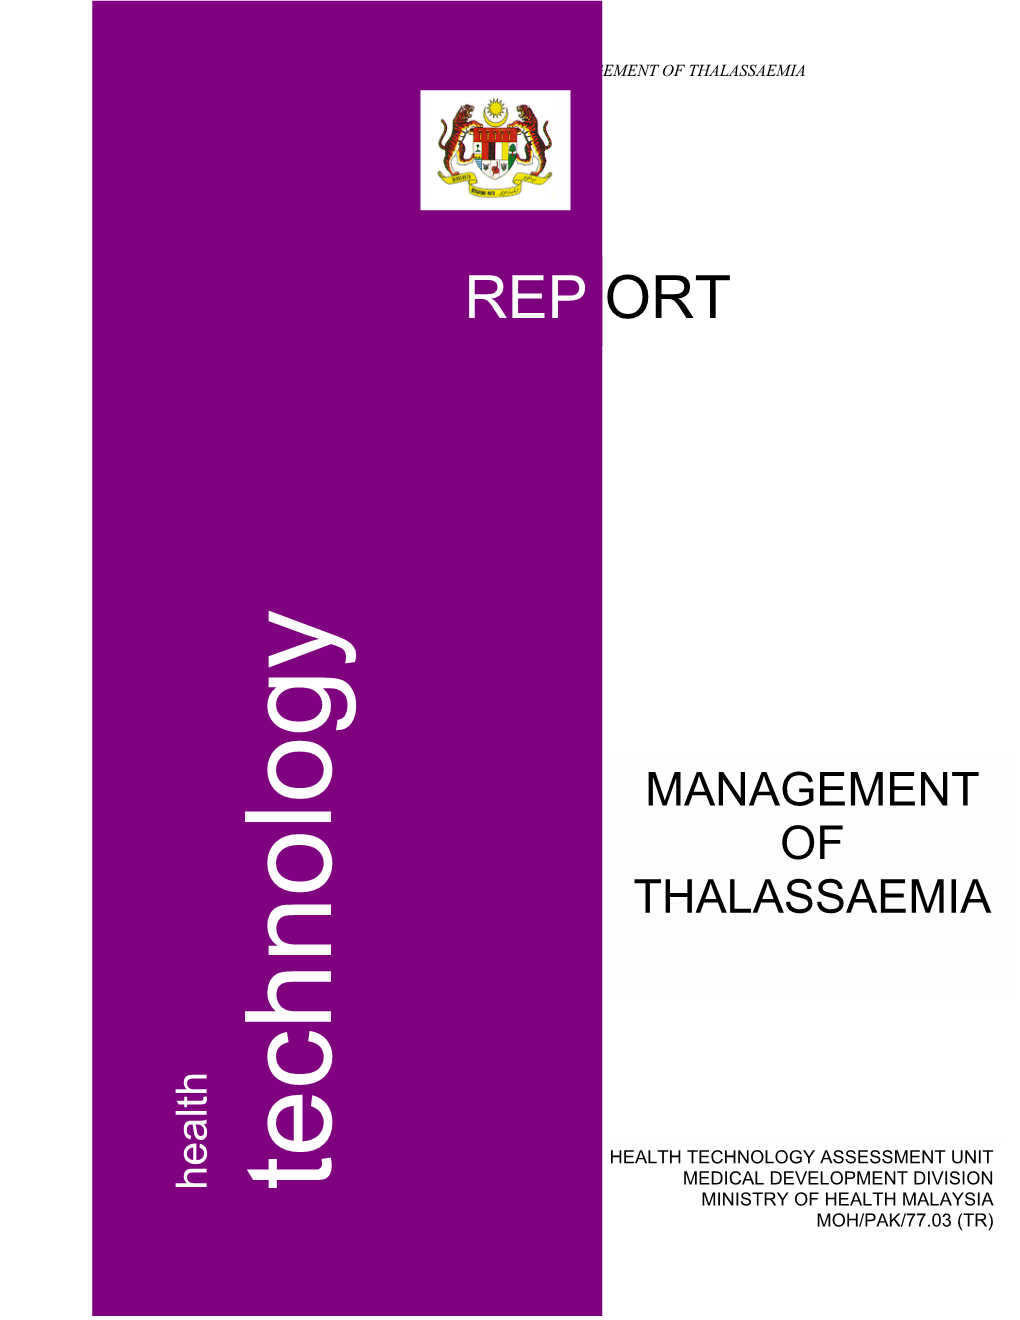 Management of Thalassaemia